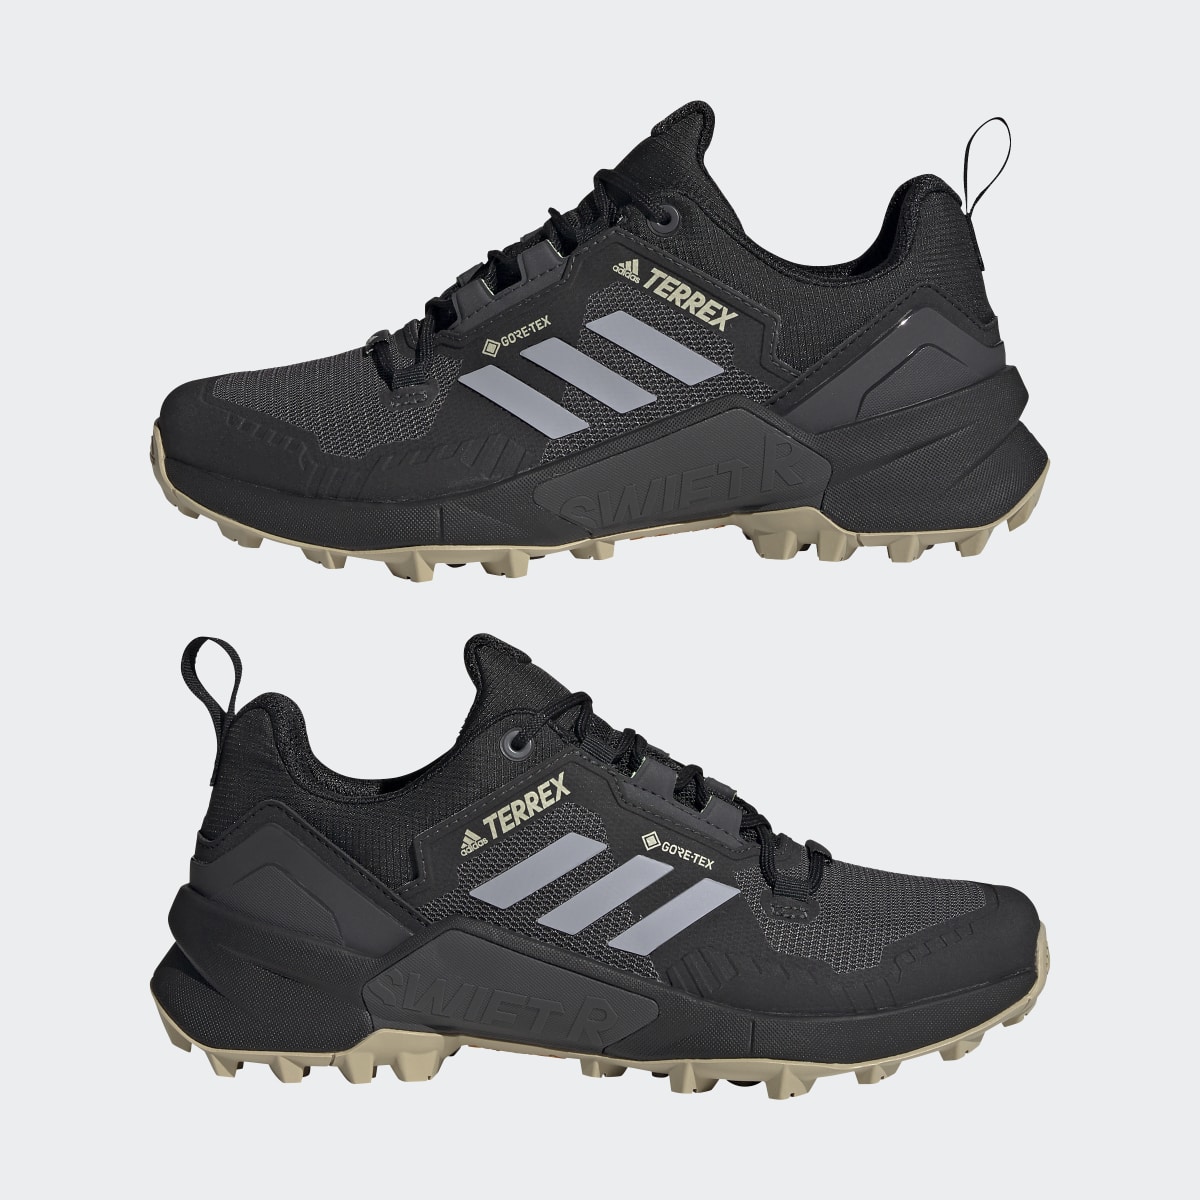 Adidas Terrex Swift R3 GORE-TEX Hiking Shoes. 8